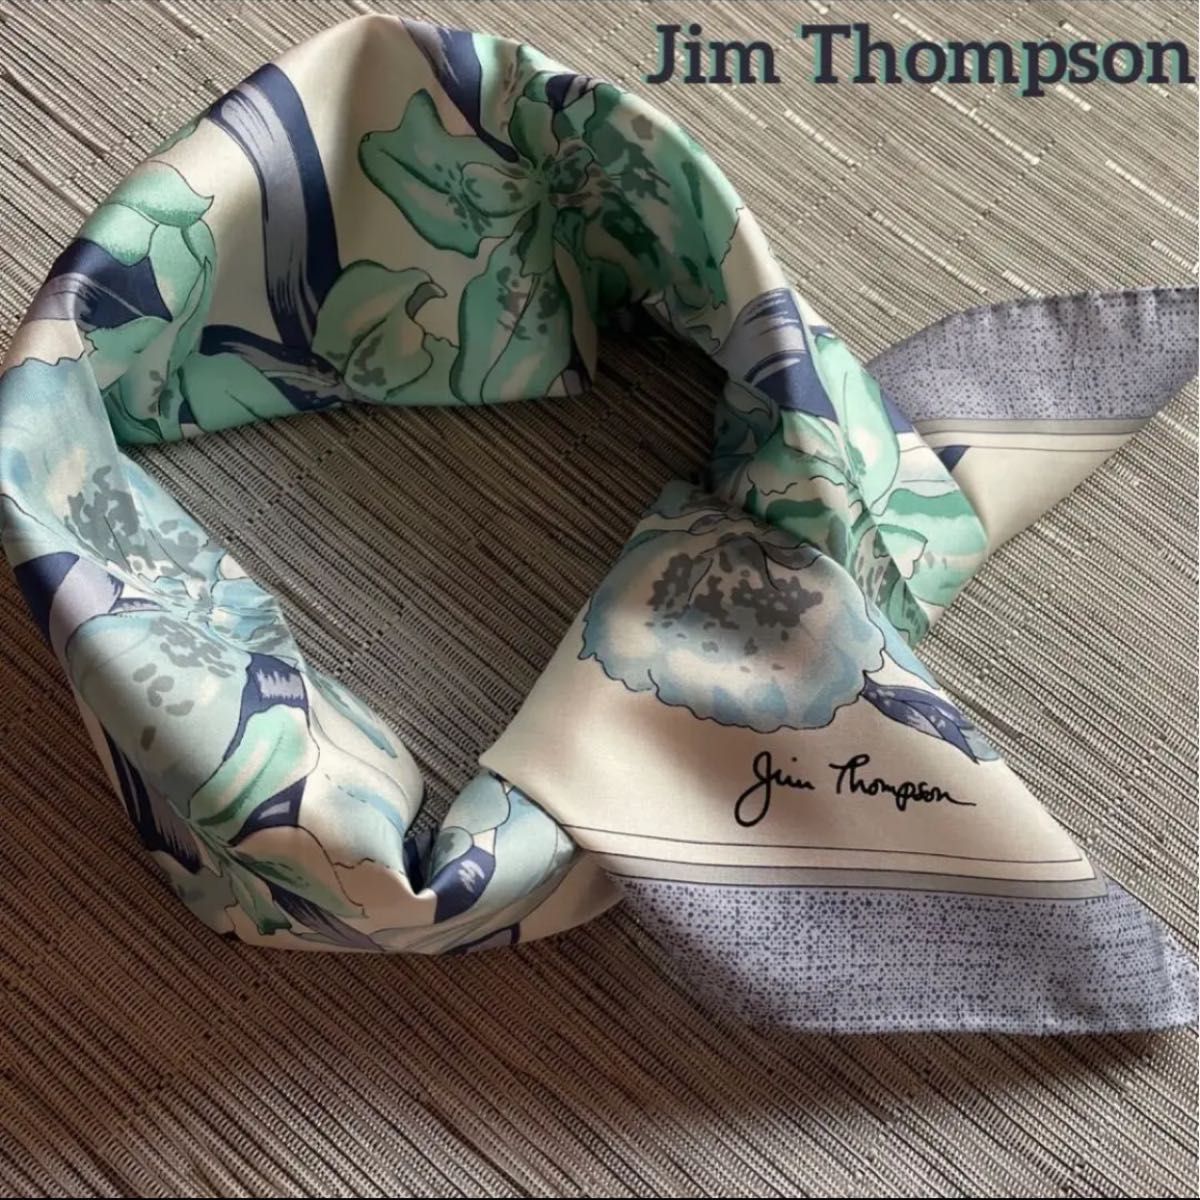 Jim thompson ジムトンプソン 大判シルクスカーフ(花柄・グレイッシュブルー＆グリーン)82cm×82cm